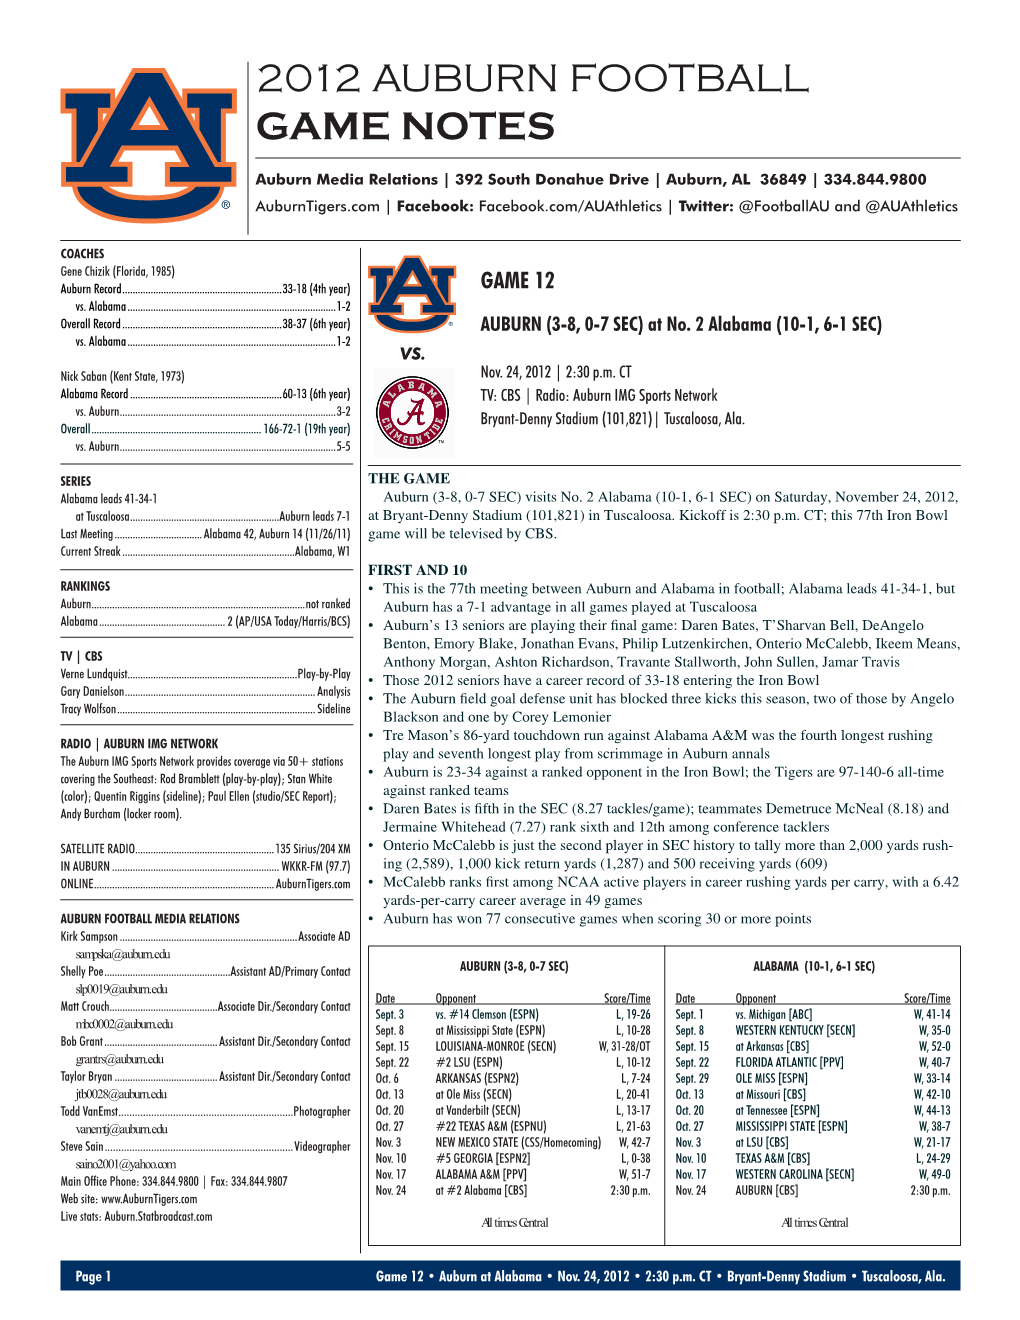 2012 Auburn Football Game Notes